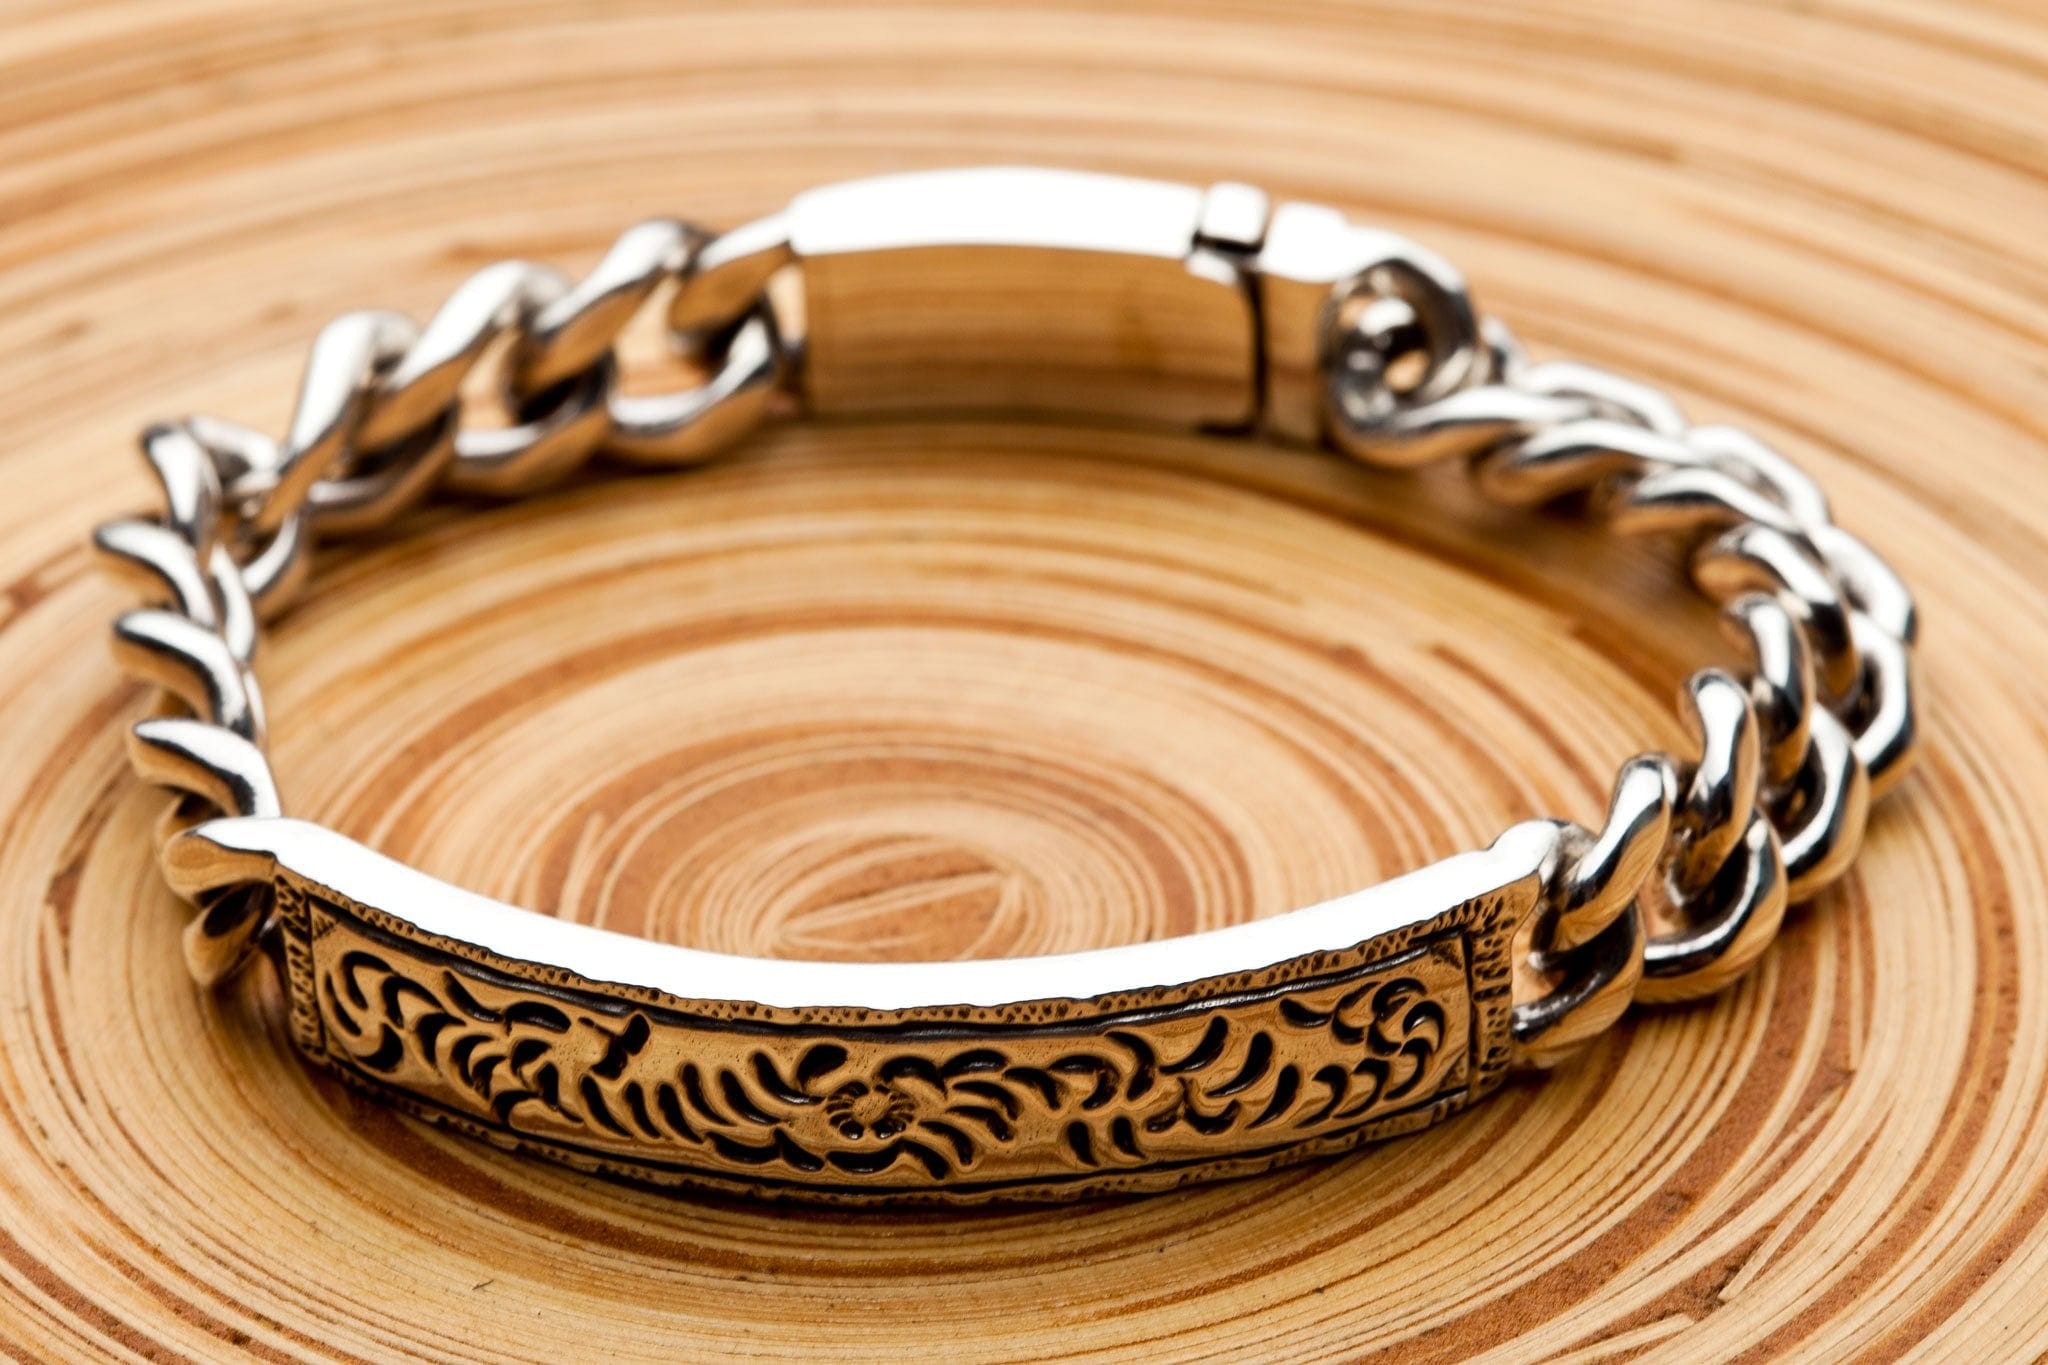 Cool & Bold Looking Chain Design Silver Men's / Boy's Bracelet